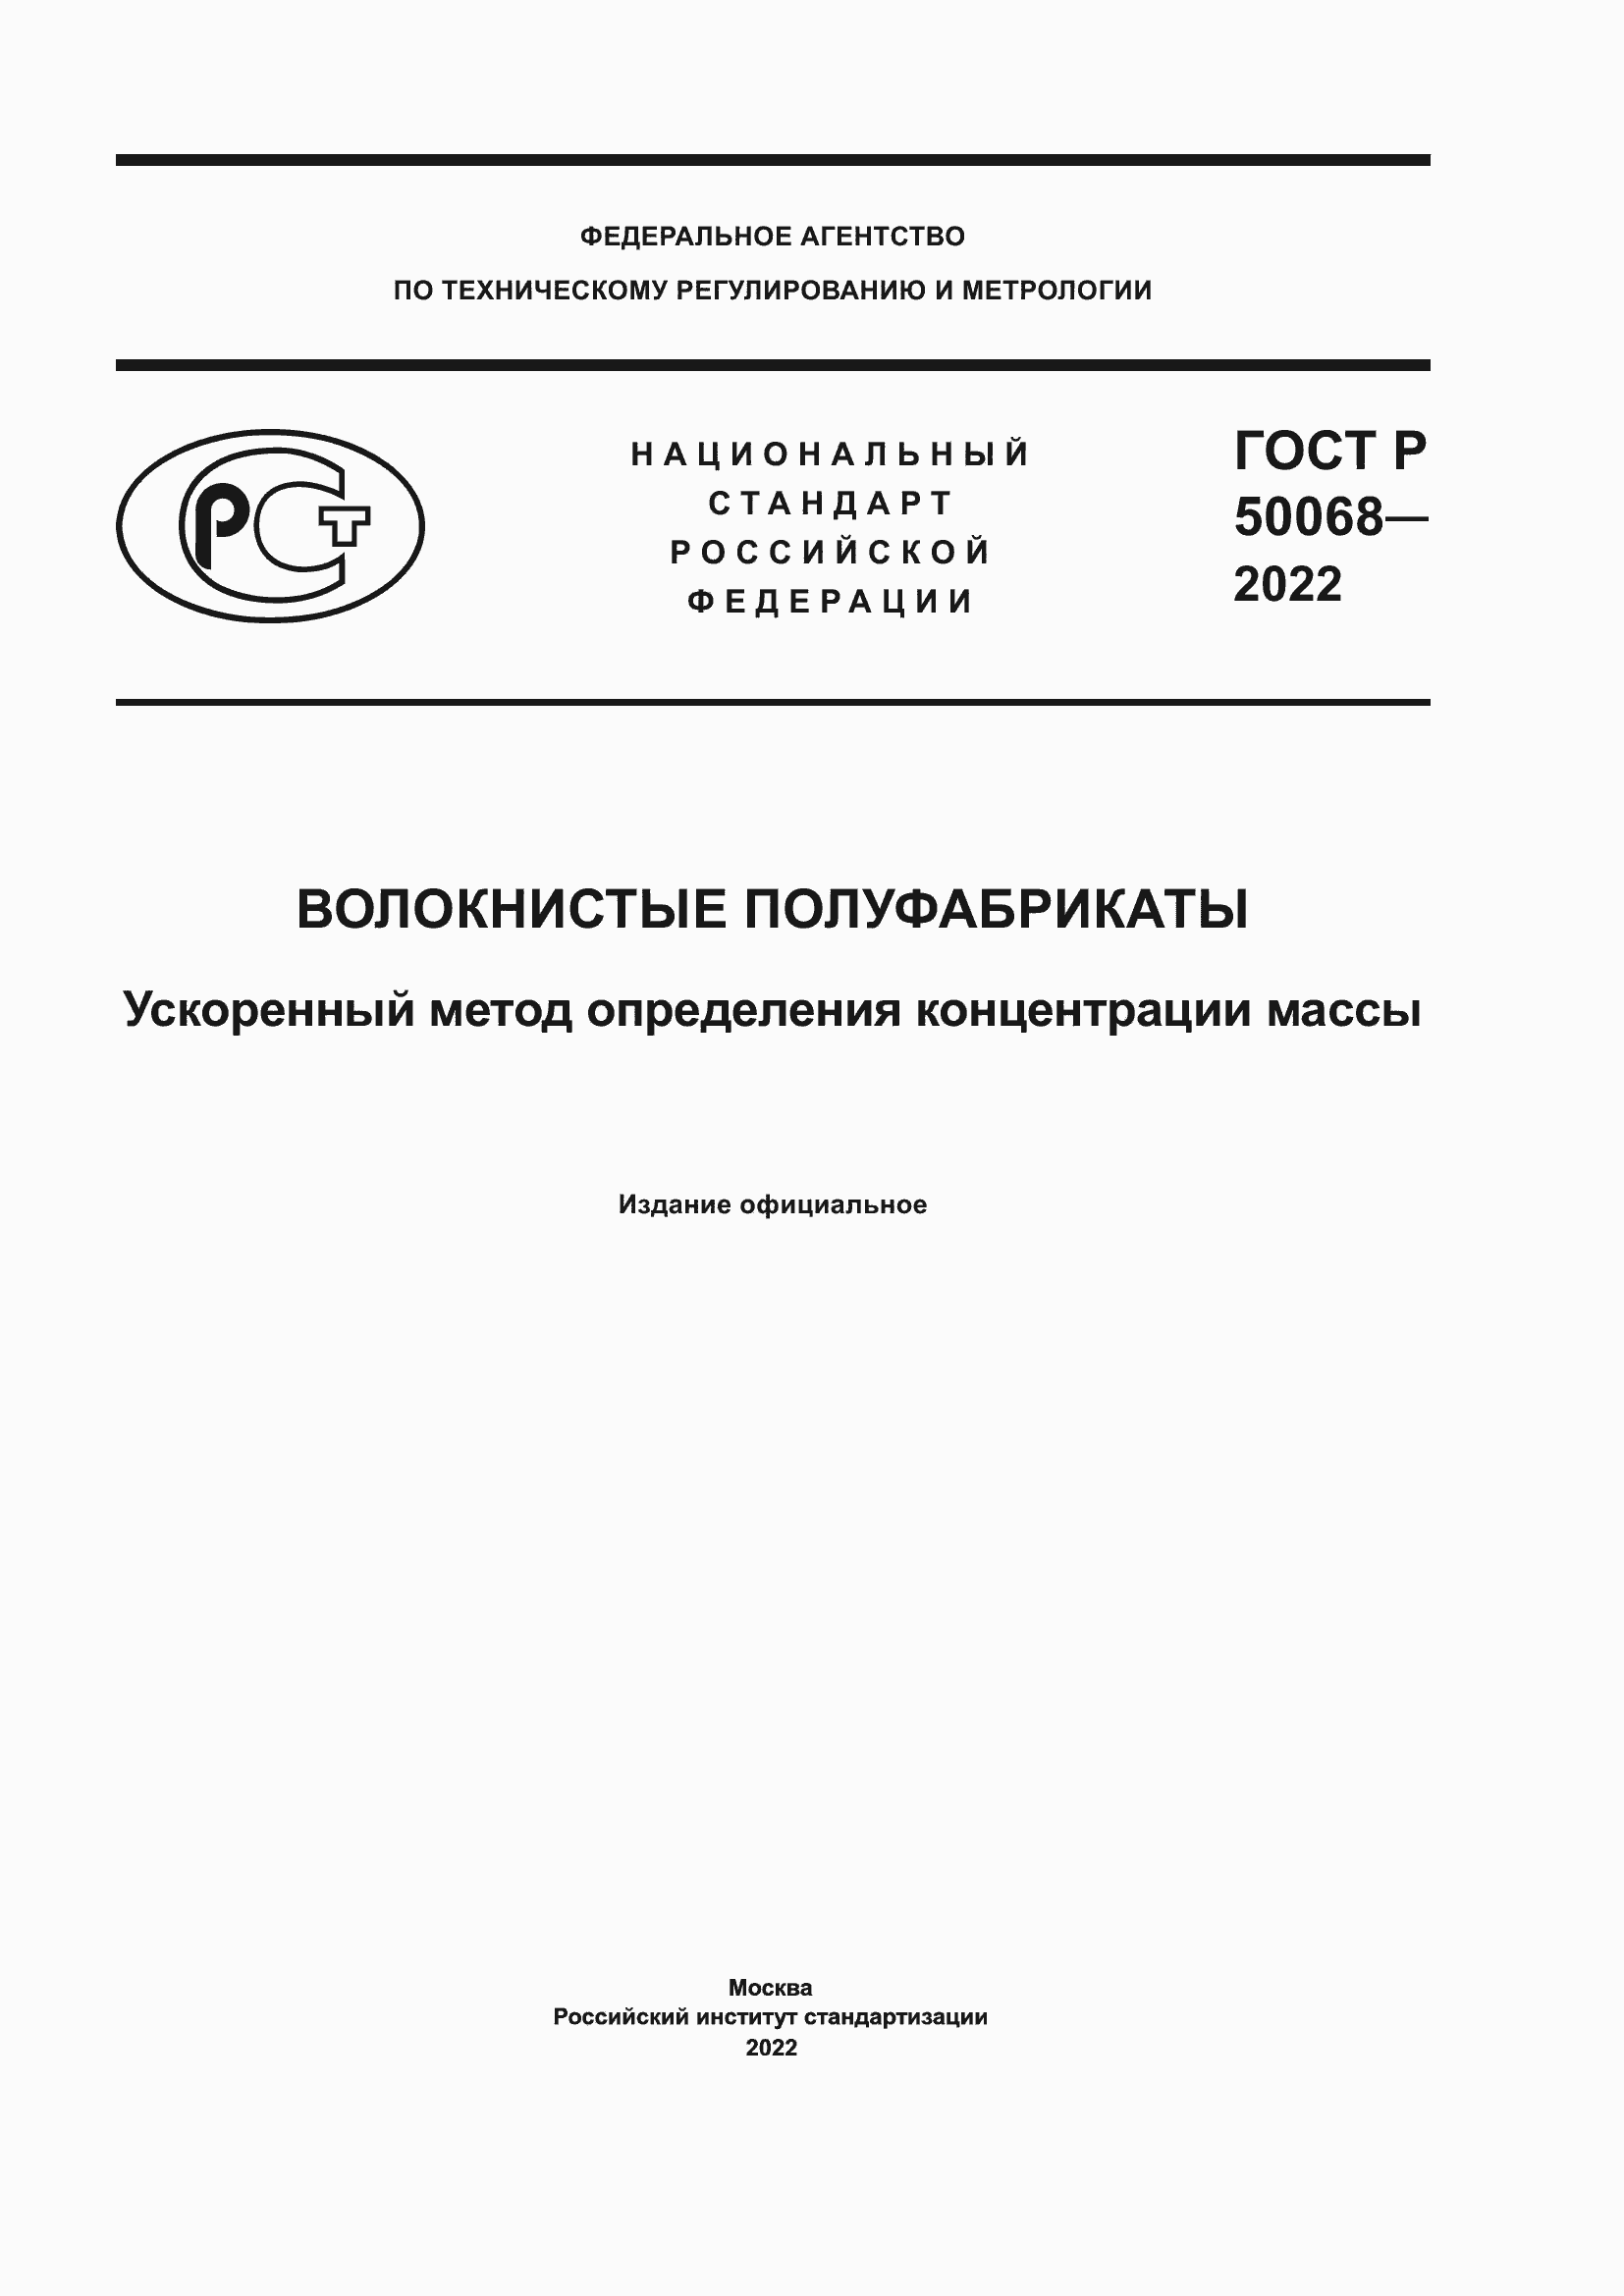 ГОСТ Р 50068-2022. Страница 1